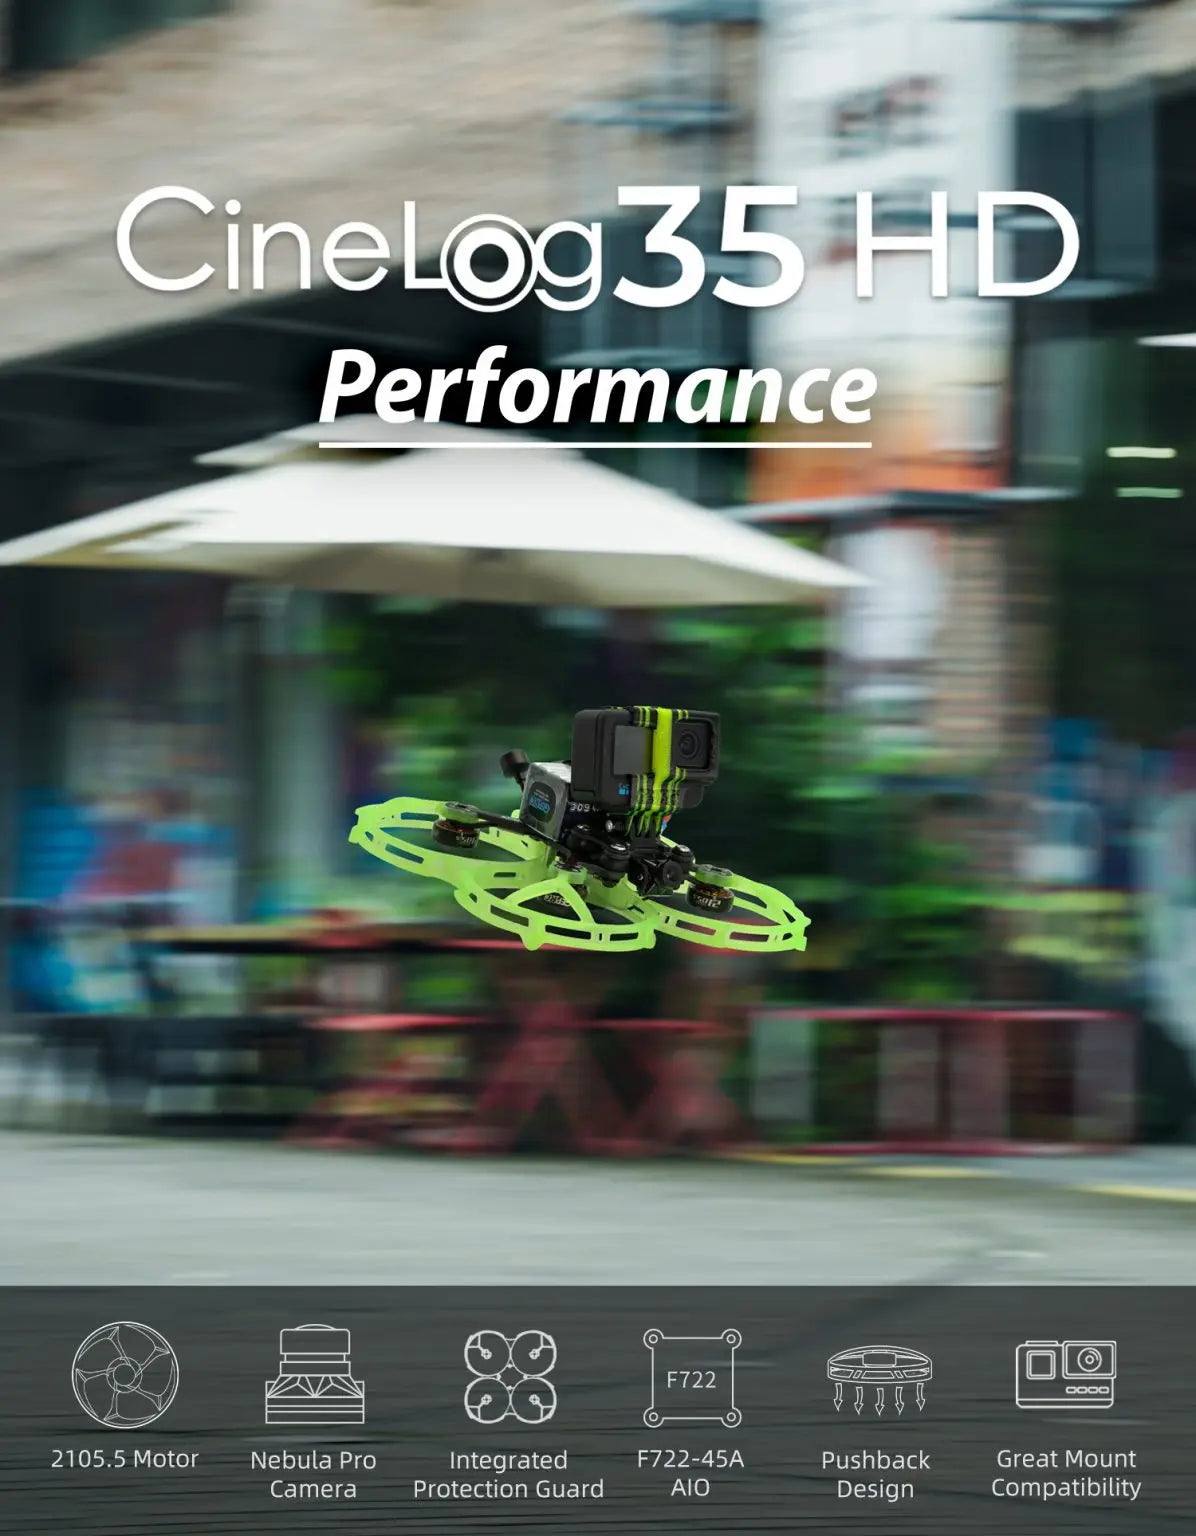 GEPRC CineLog35 FPV Drone, Cinelog35 HD Performance Jc9 2 F722 CooO 2105.5 Motor